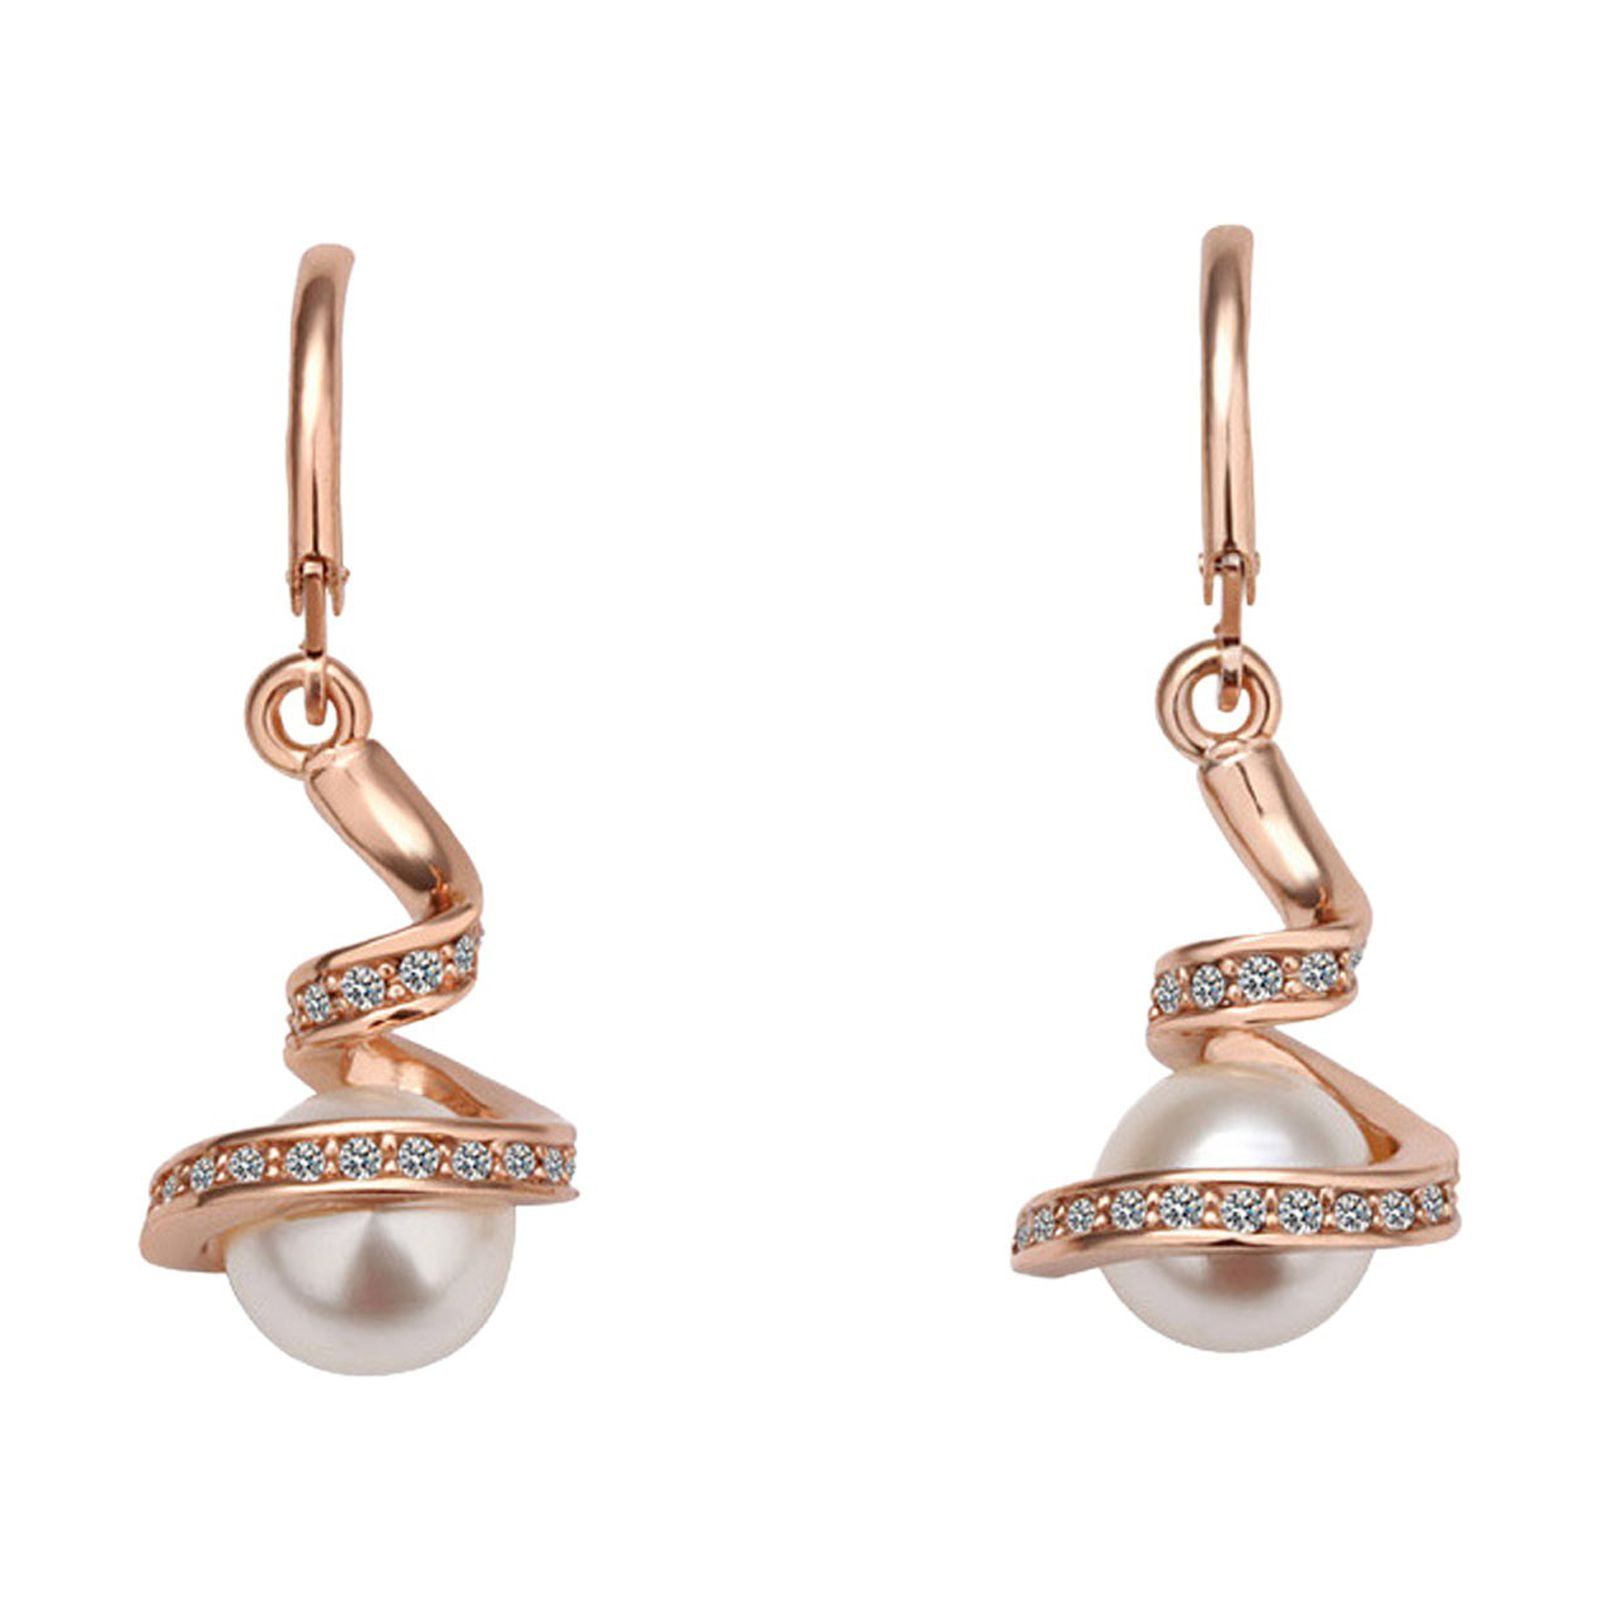 Hesroicy Elegant Faux Pearls Long Earrings Pearls String Linear Dangle  Wedding Party Gift 